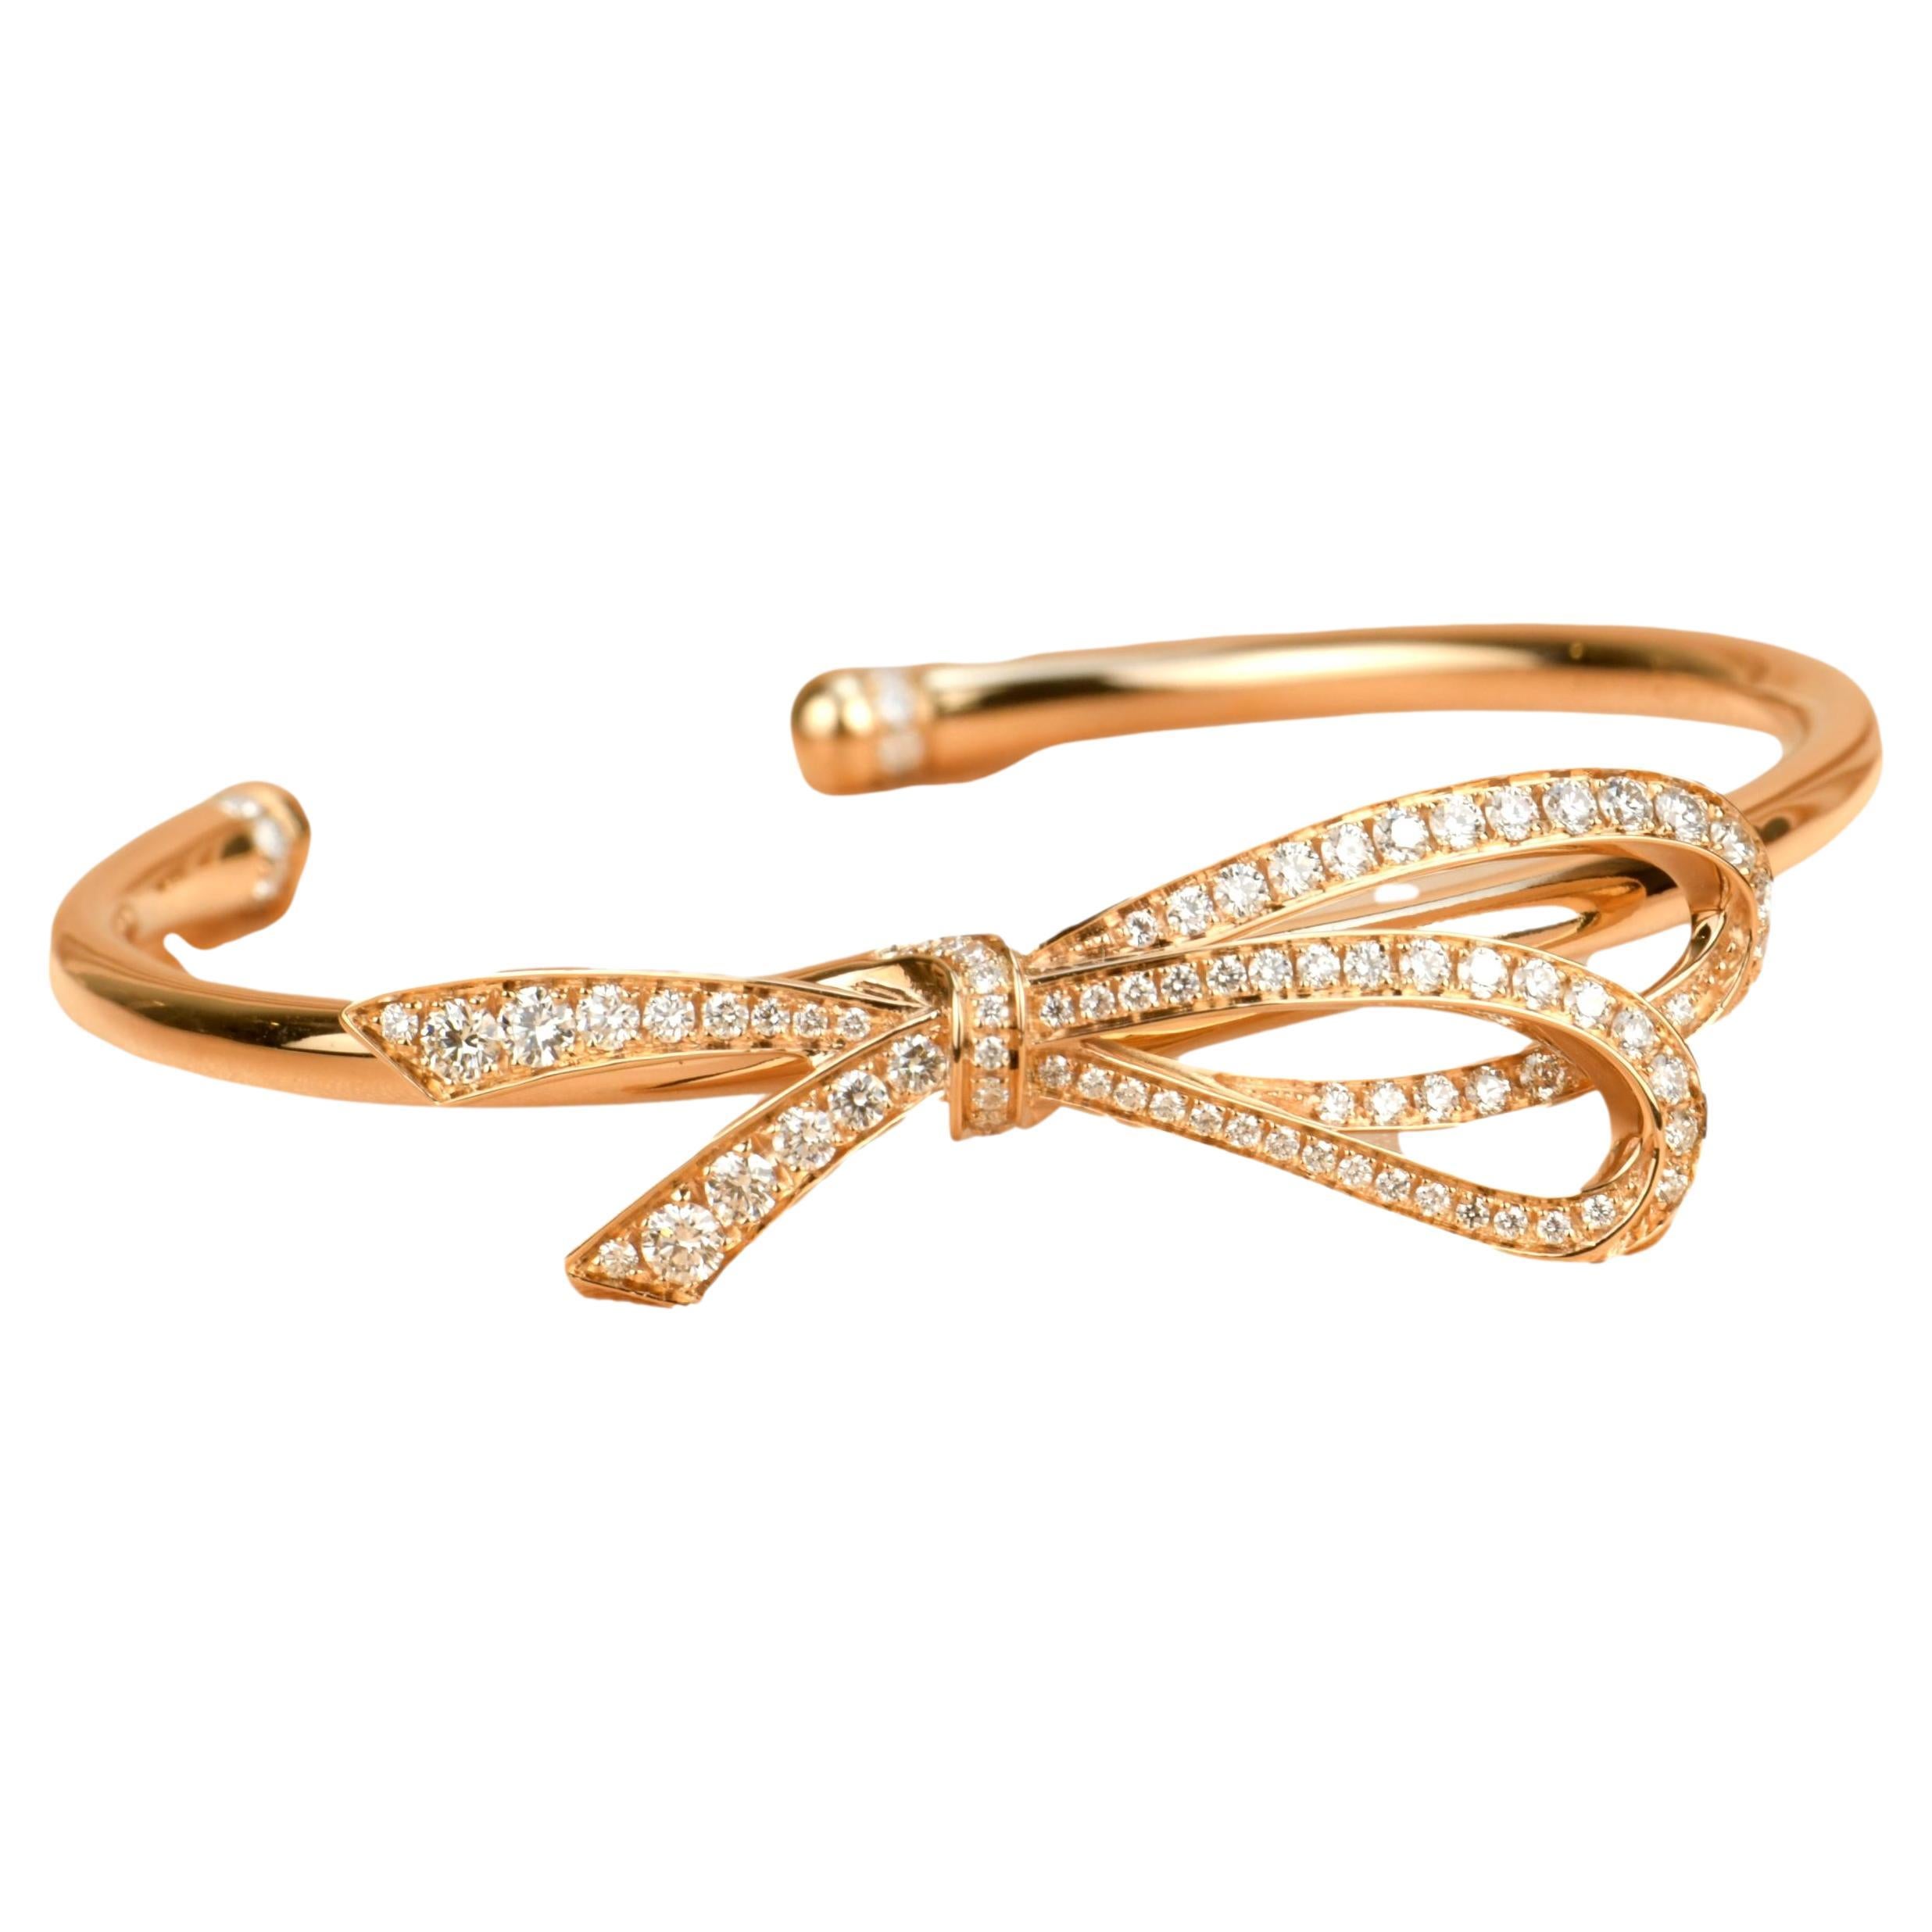 Tiffany Bow Diamond Bracelet in 18K Rose Gold Size M